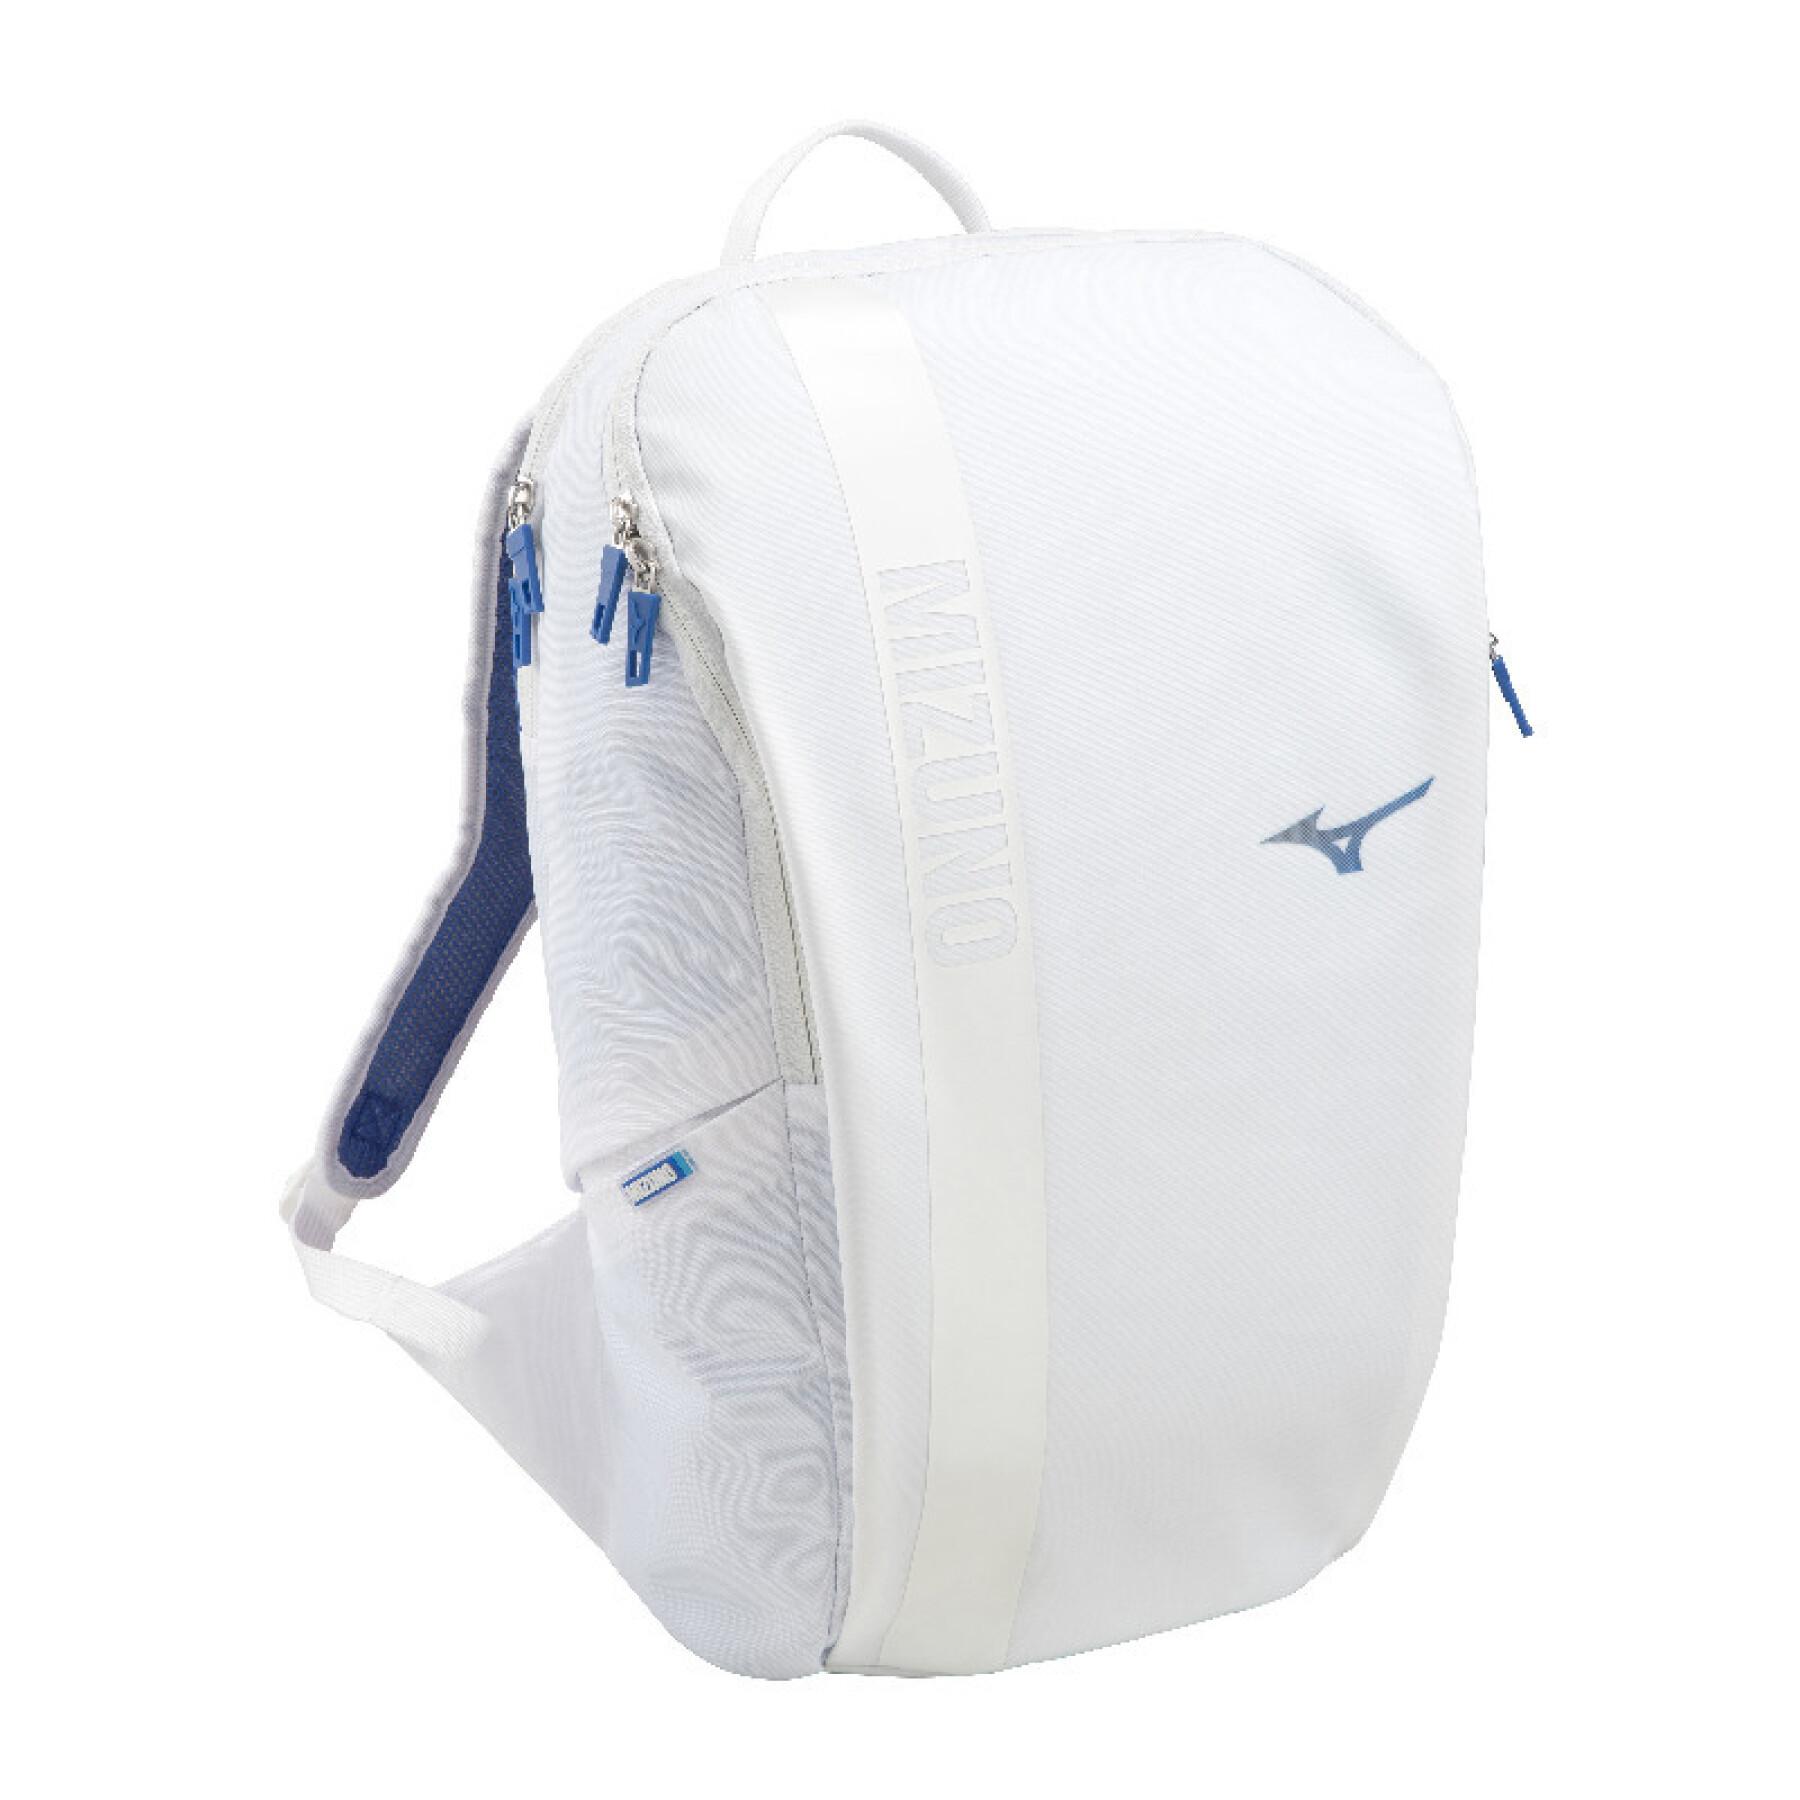 Backpack Mizuno 22 L